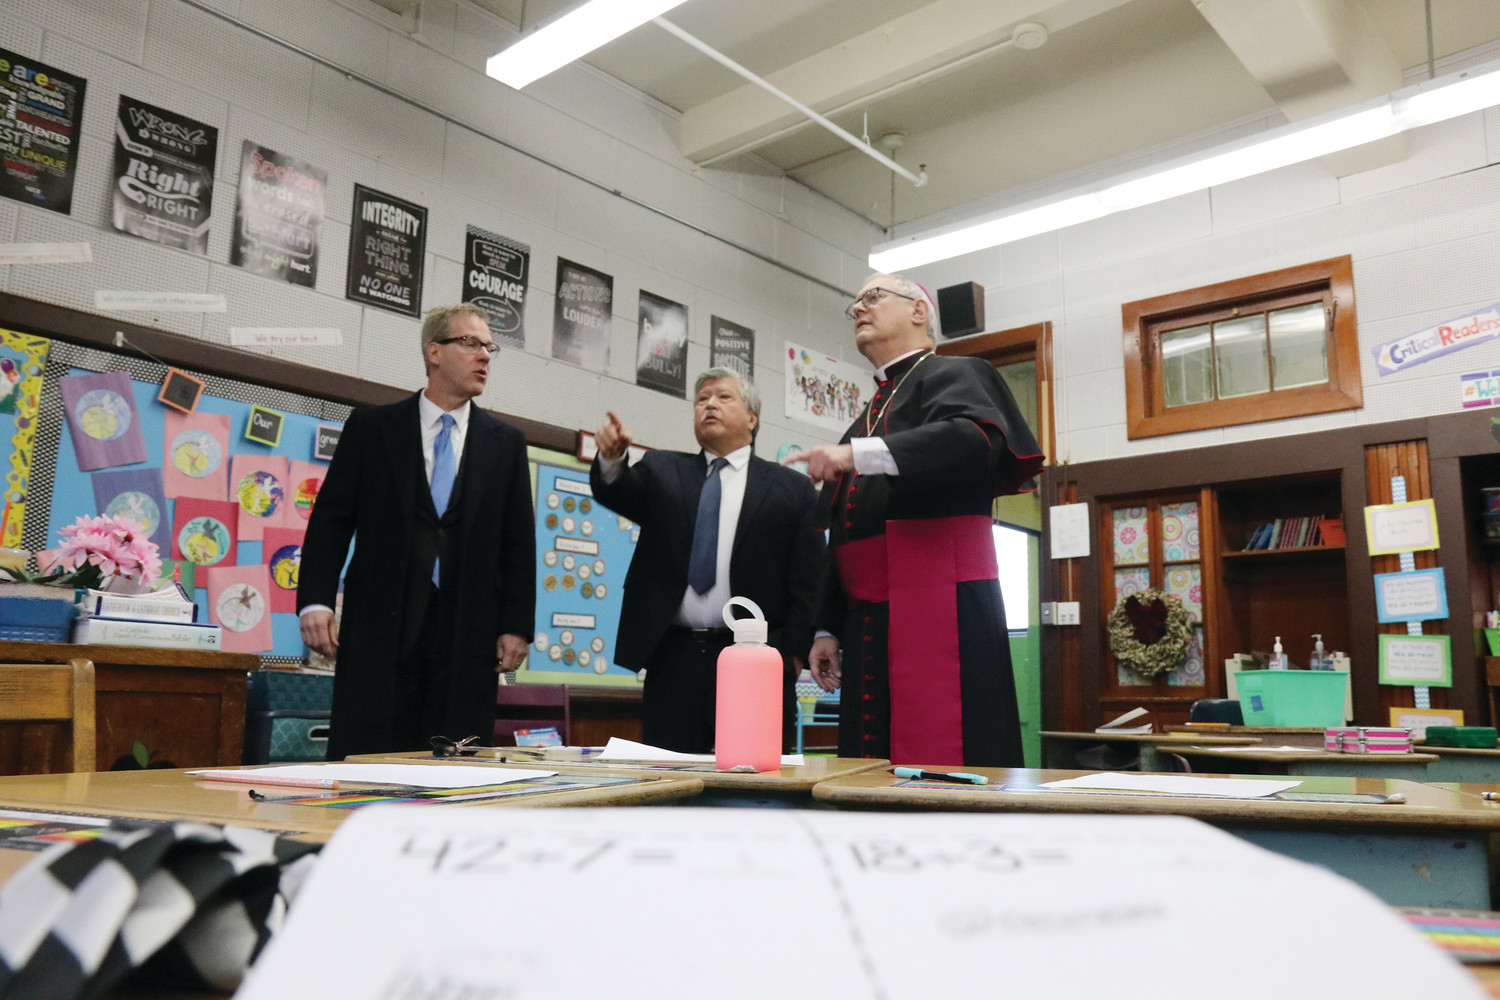 The bishop joins Catholic Schools Superintendent Daniel Ferris and Principal Louis Hebert in touring the school on Wednesday, Dec. 12.